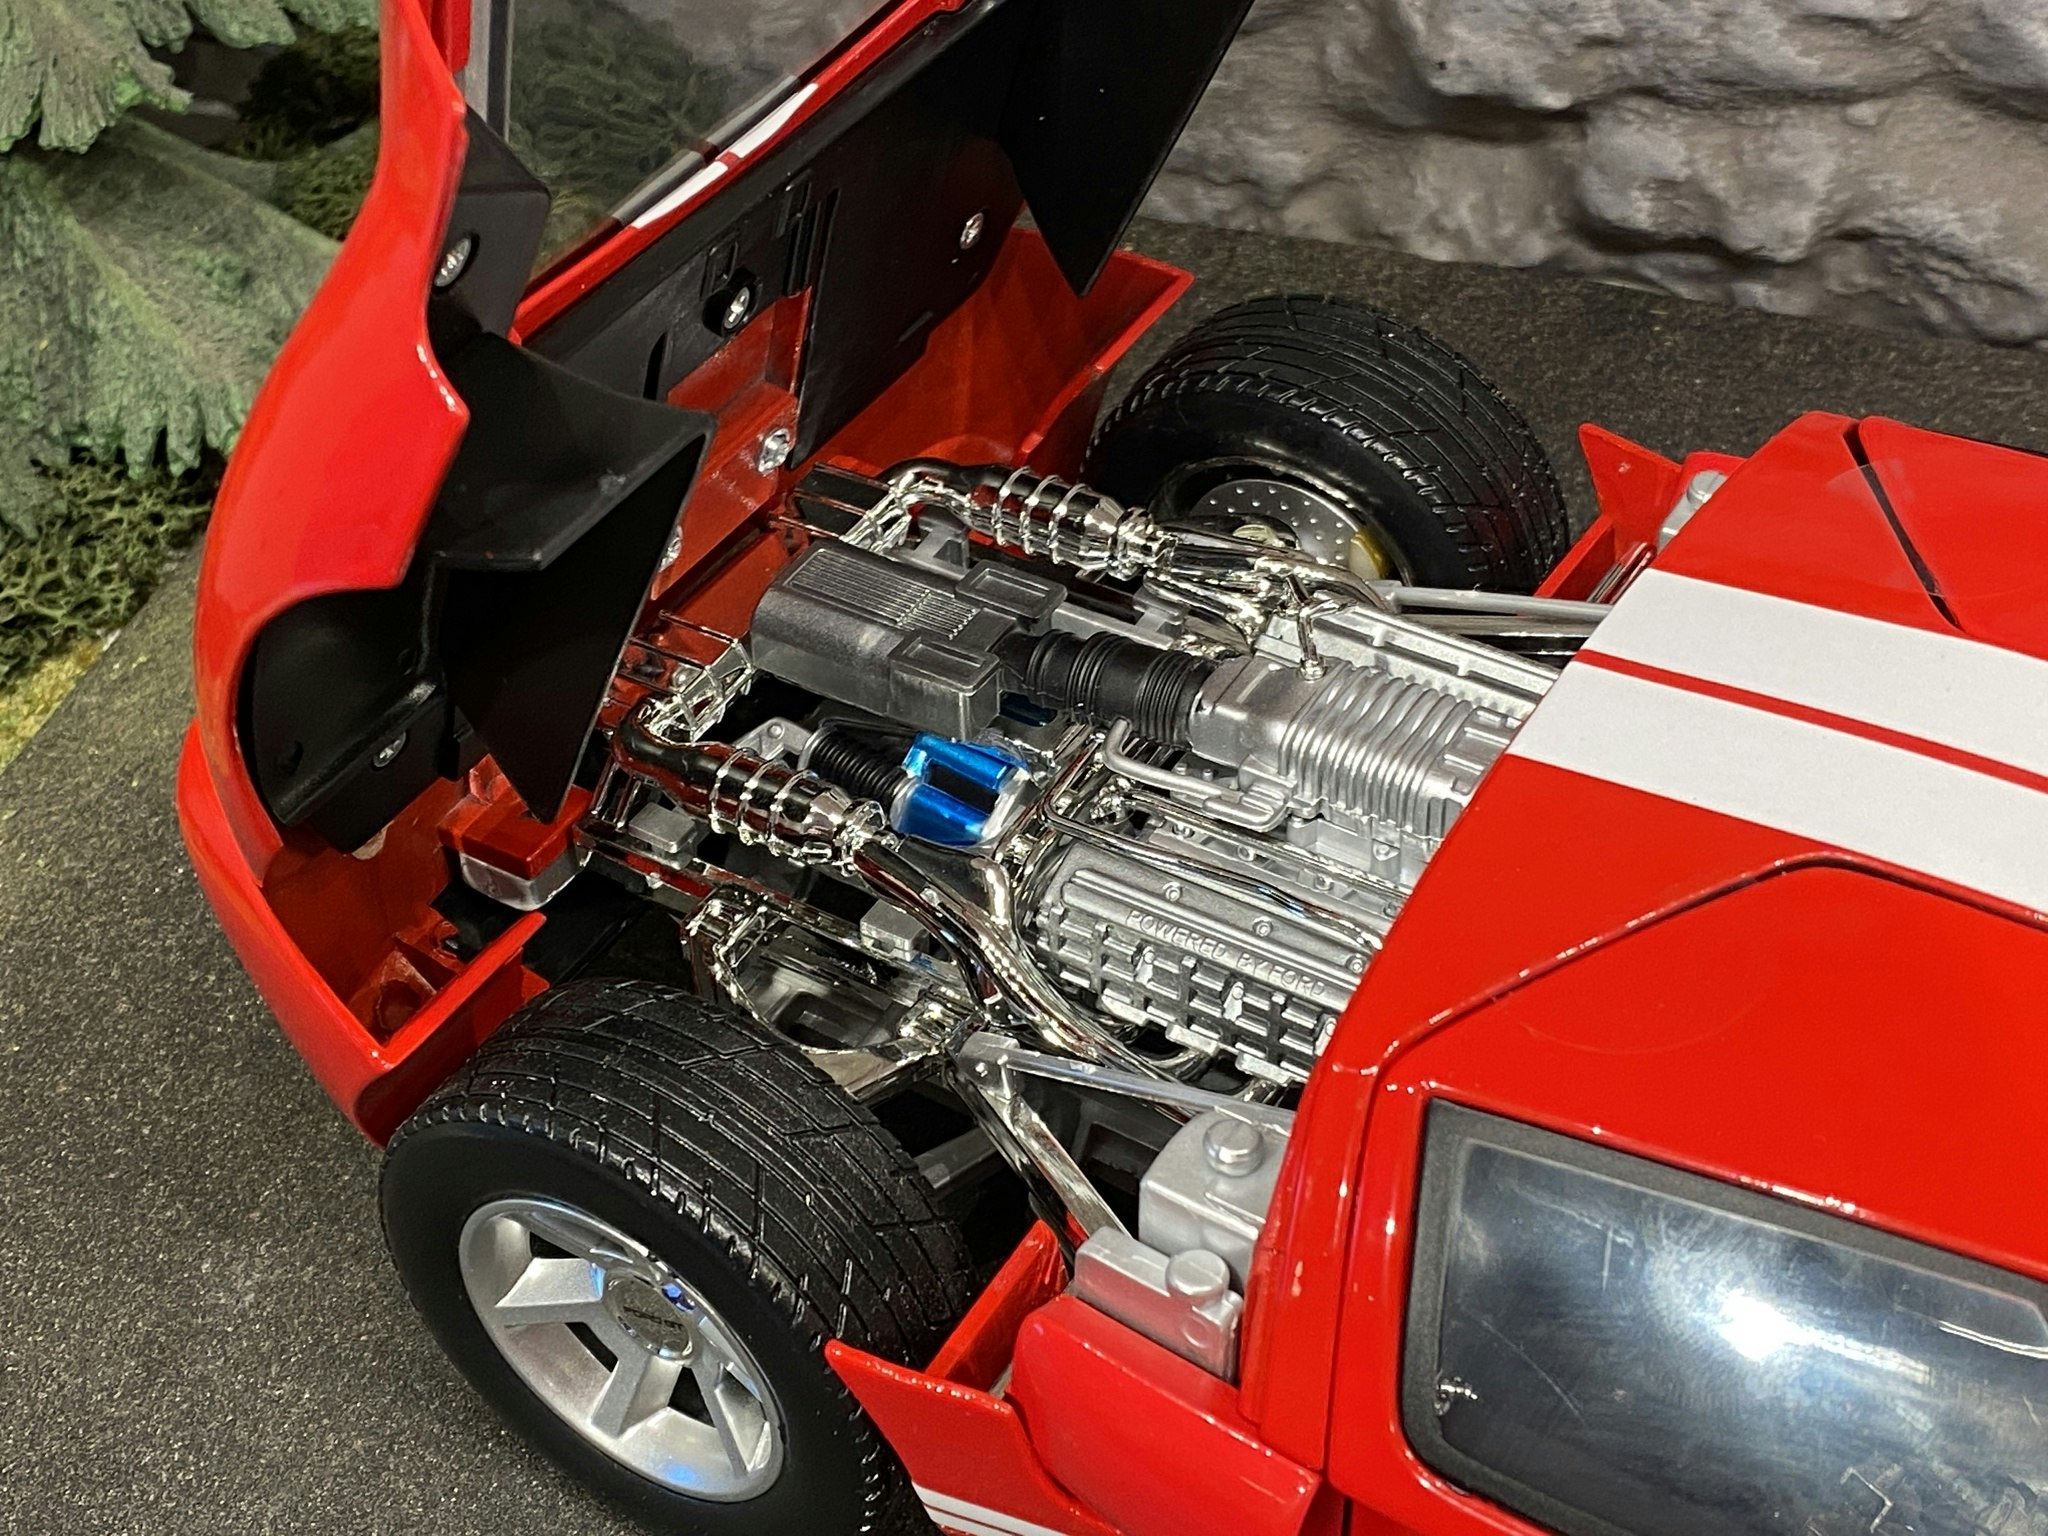 Skala 1/12 Stor & tung Ford GT Concept, Röd m vita stripes fr MotorMax